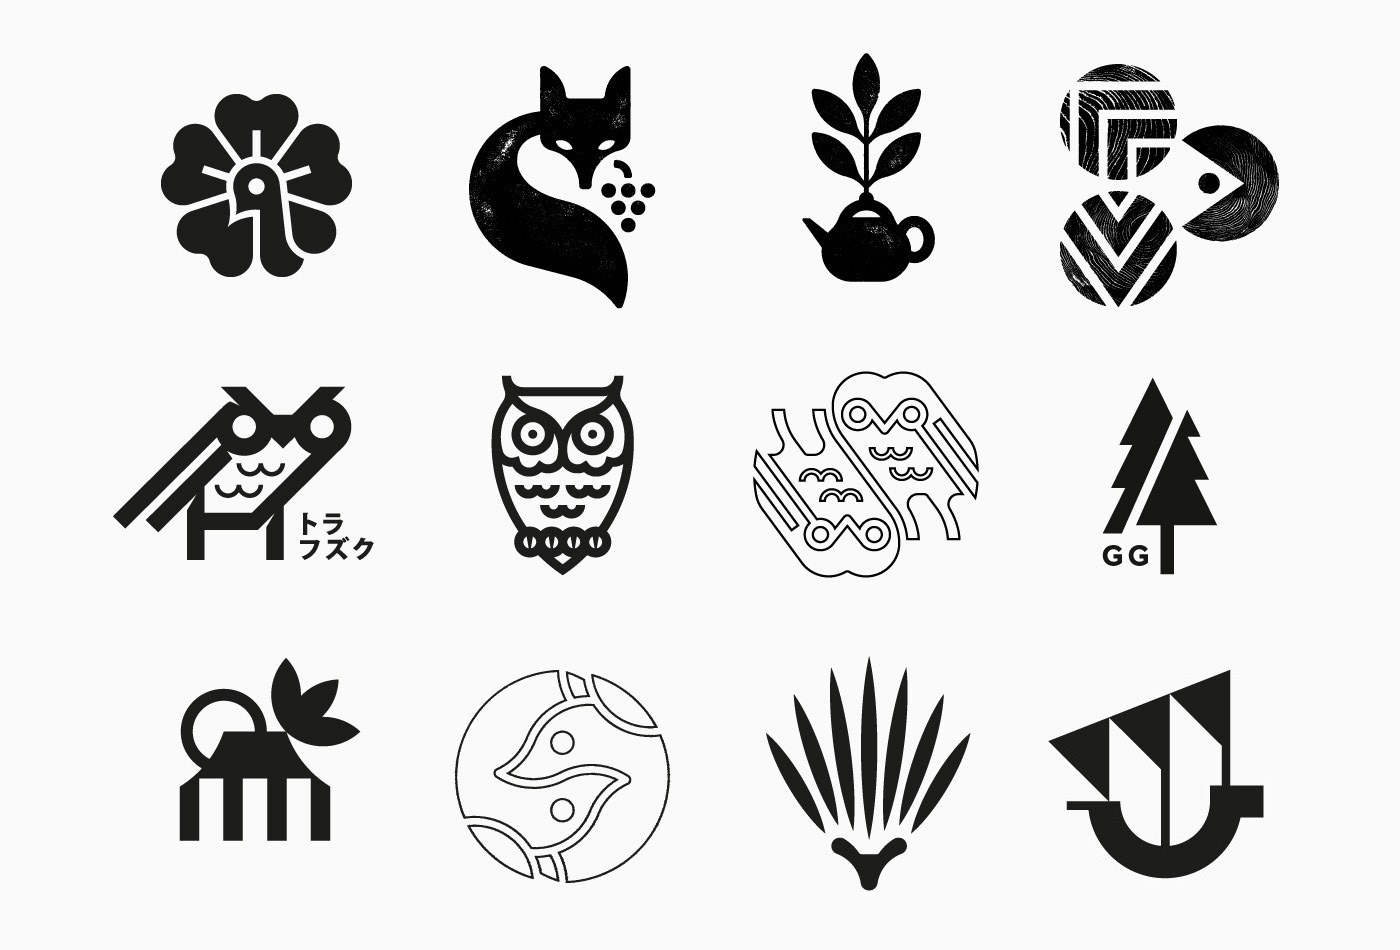 logo logos marks Logotype icons brand symbols symbol Picto pictogram